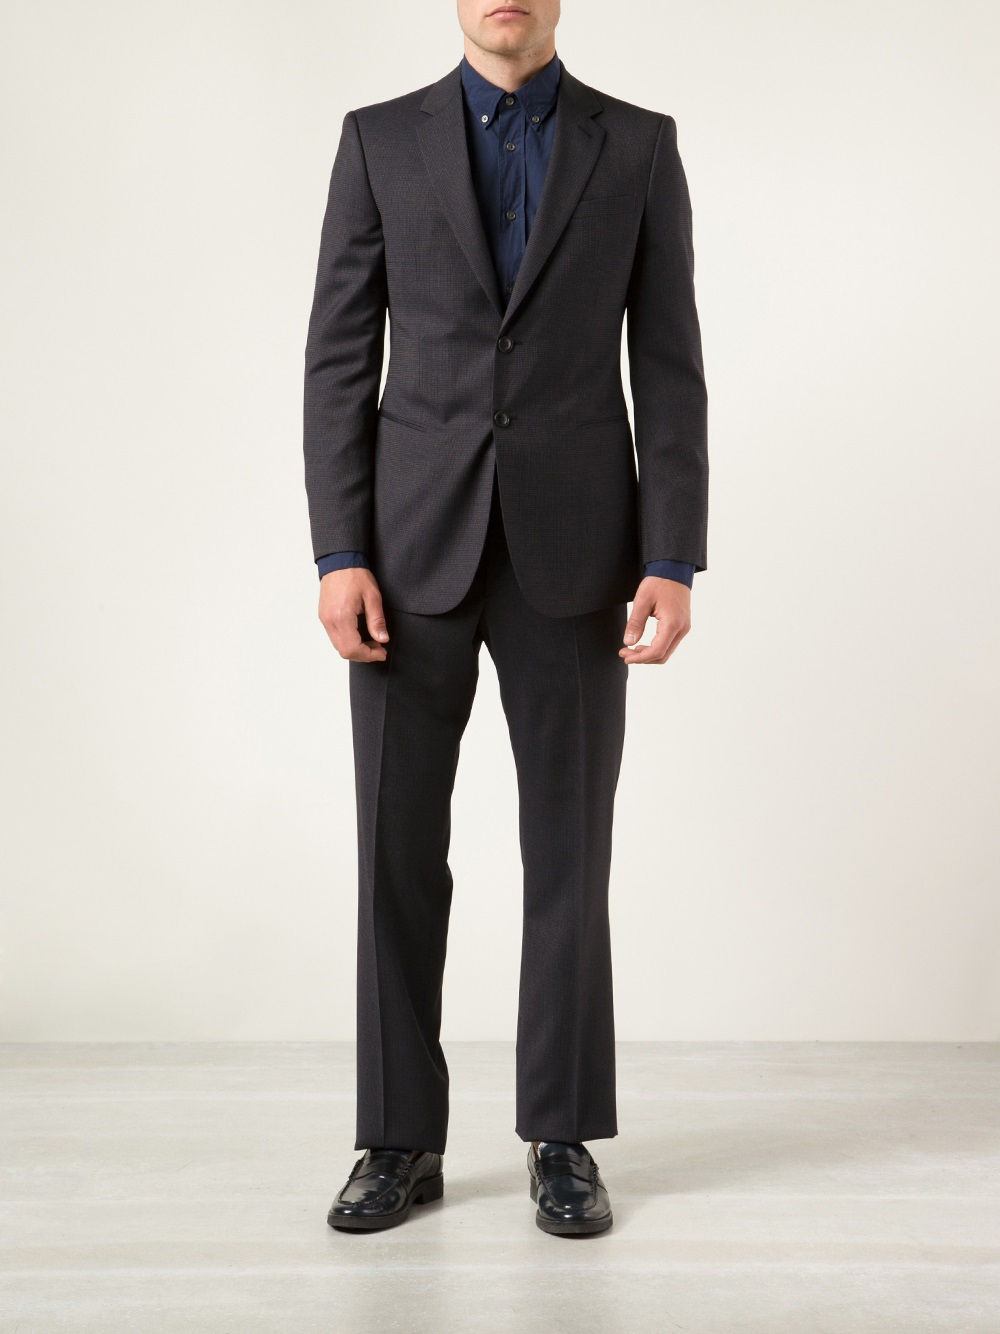 Lyst - Giorgio Armani Taylor Suit in Blue for Men